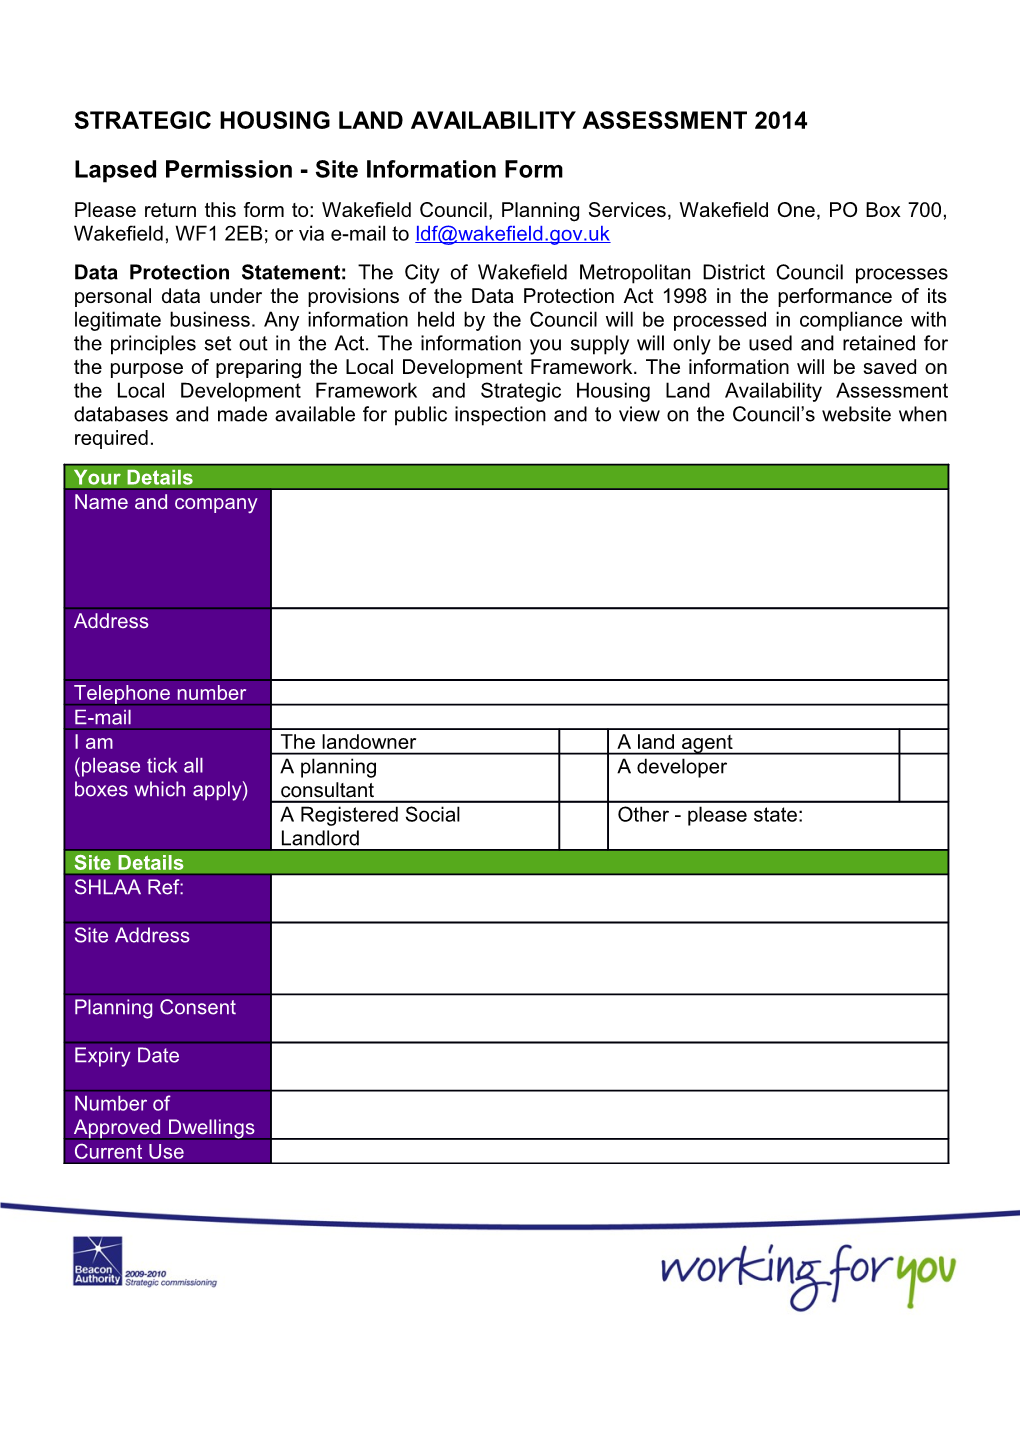 Strategic Housing Land Availability Assessment Site Information Form 2015